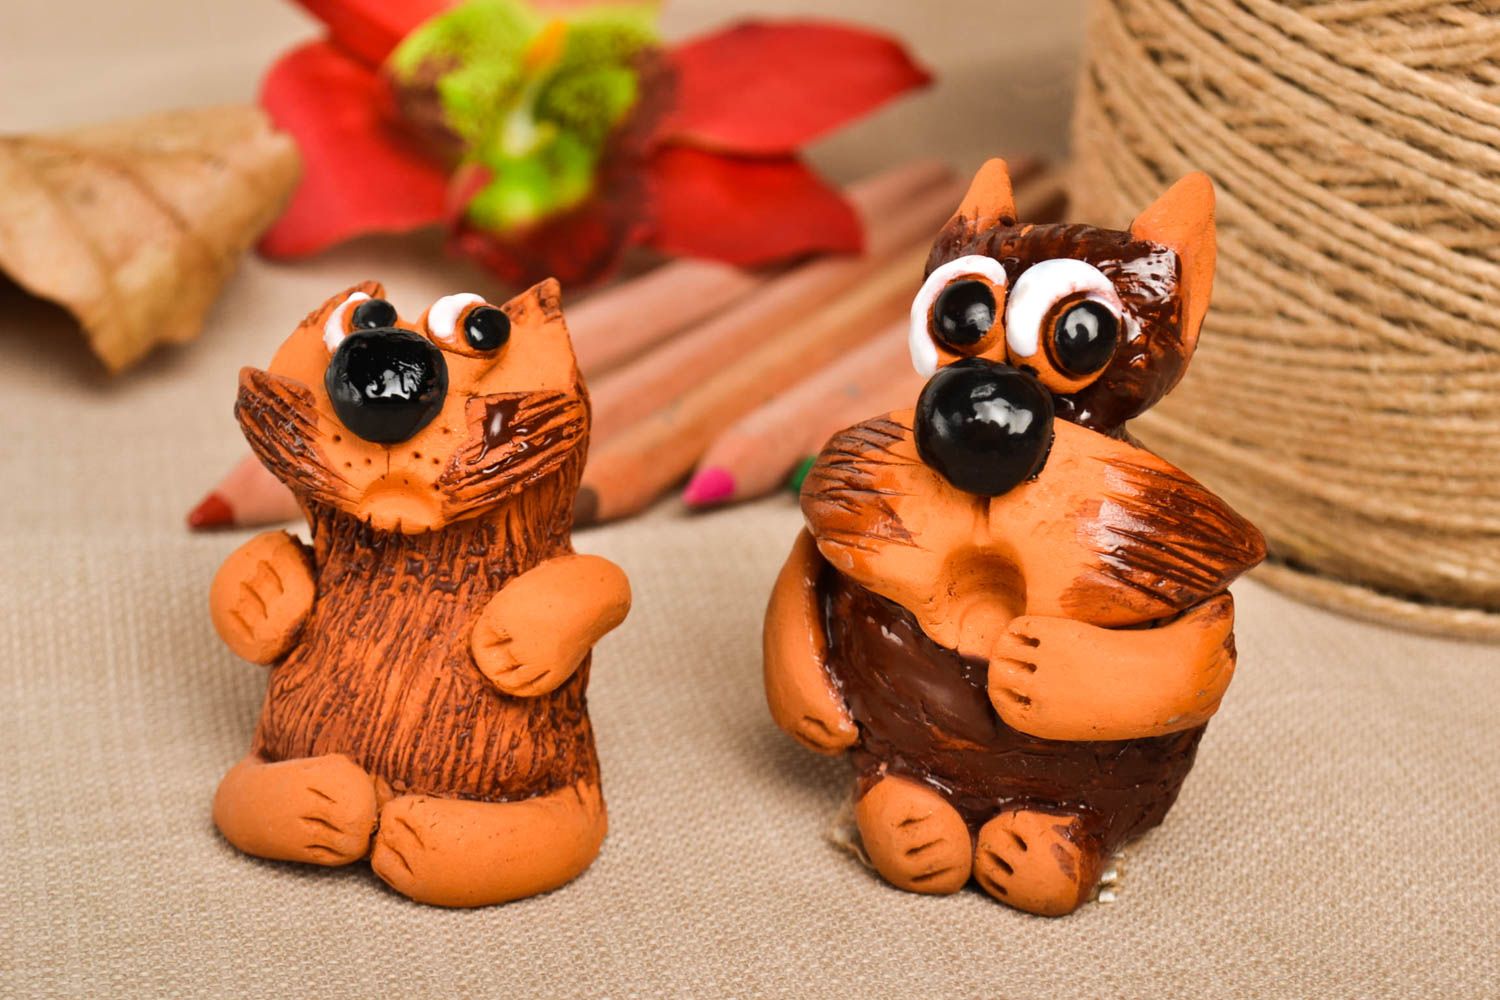 Handmade ceramic figurines 2 clay cute animals decor decorative use only photo 1